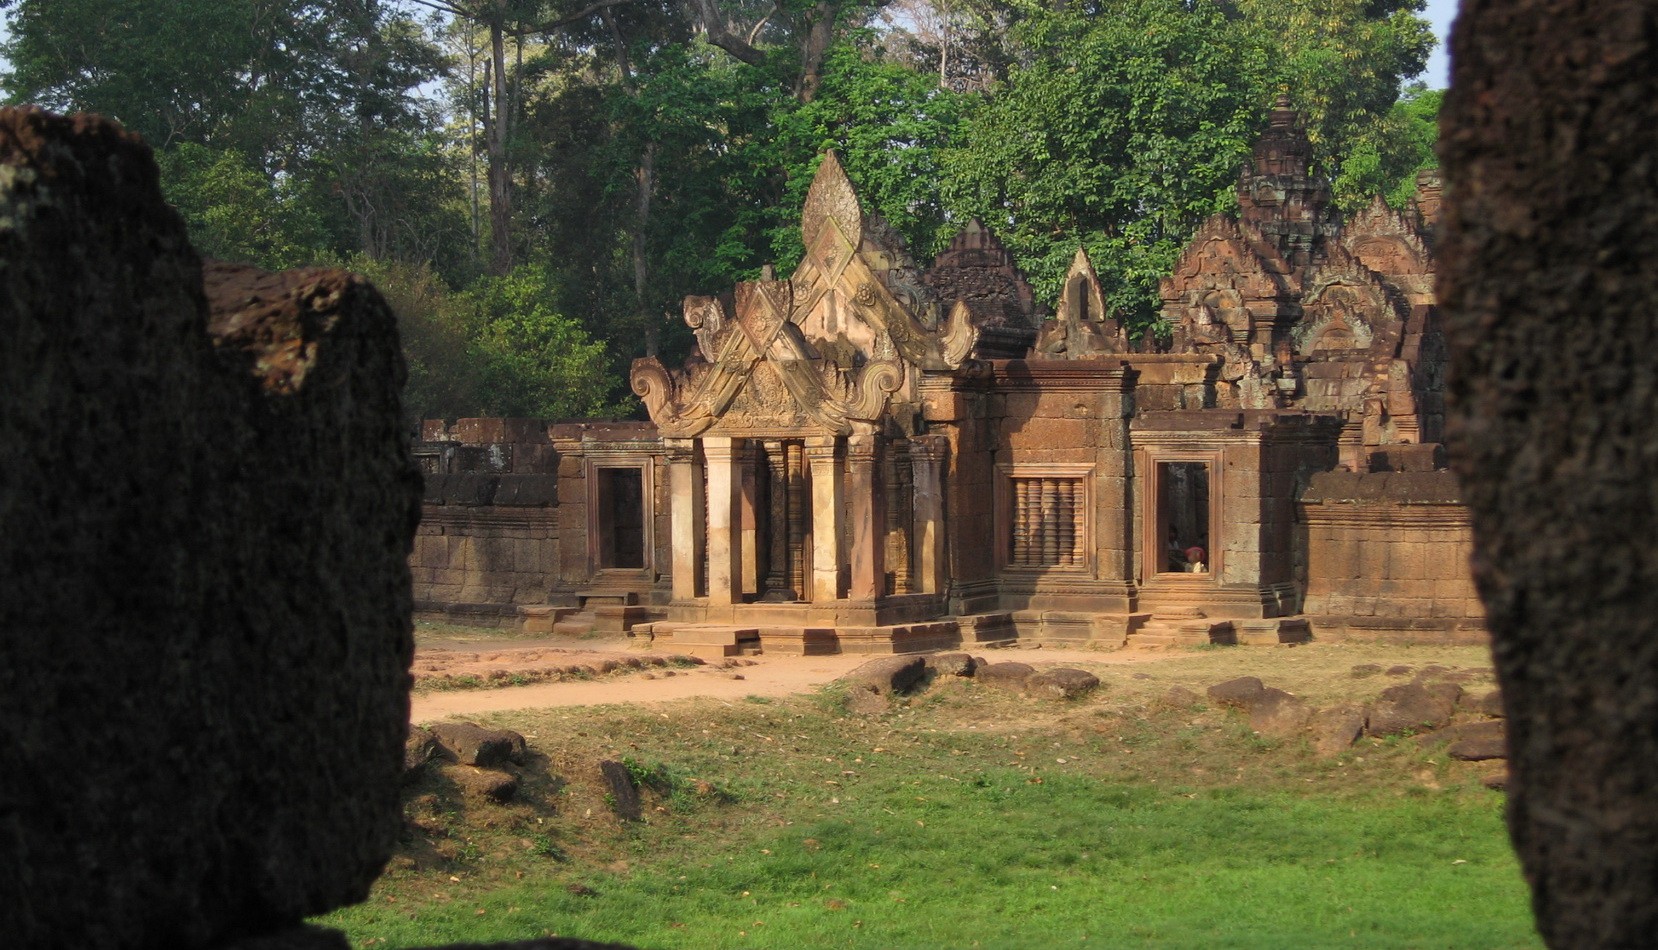 banners/AsiaTracks_banteay srei, Angkor_5f7c7b269b785.jpg